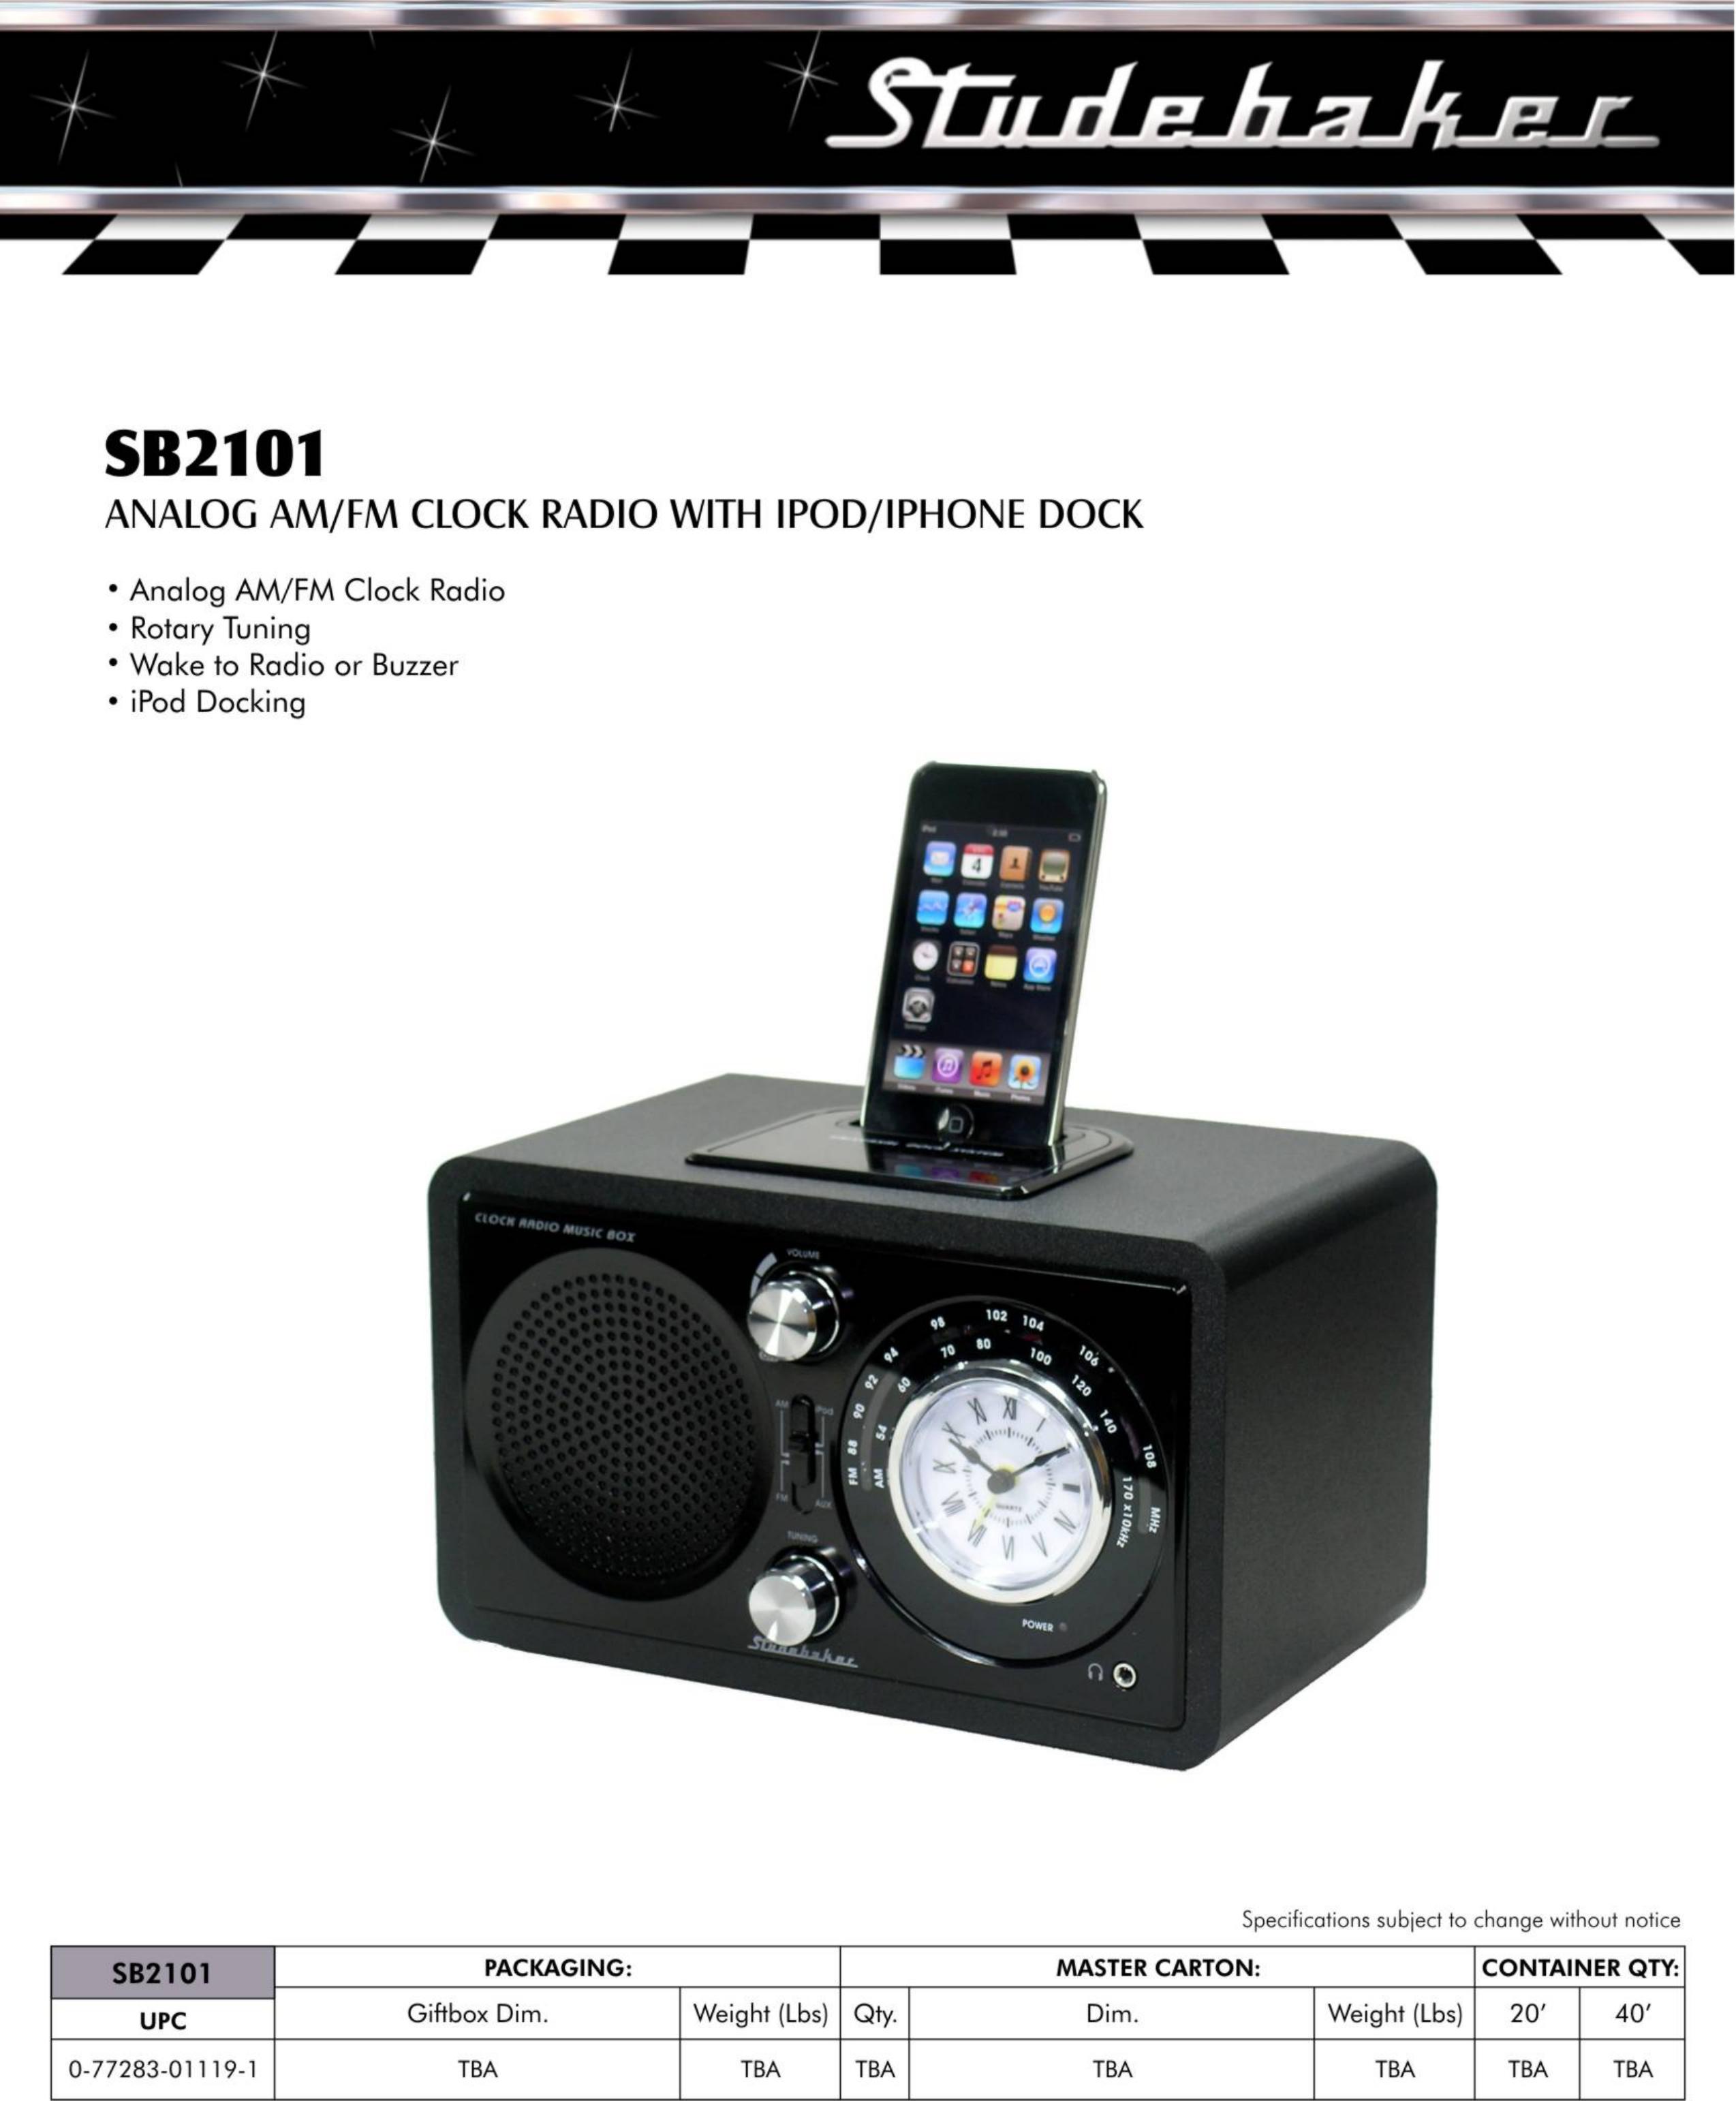 Spectra SB2101 Clock Radio User Manual